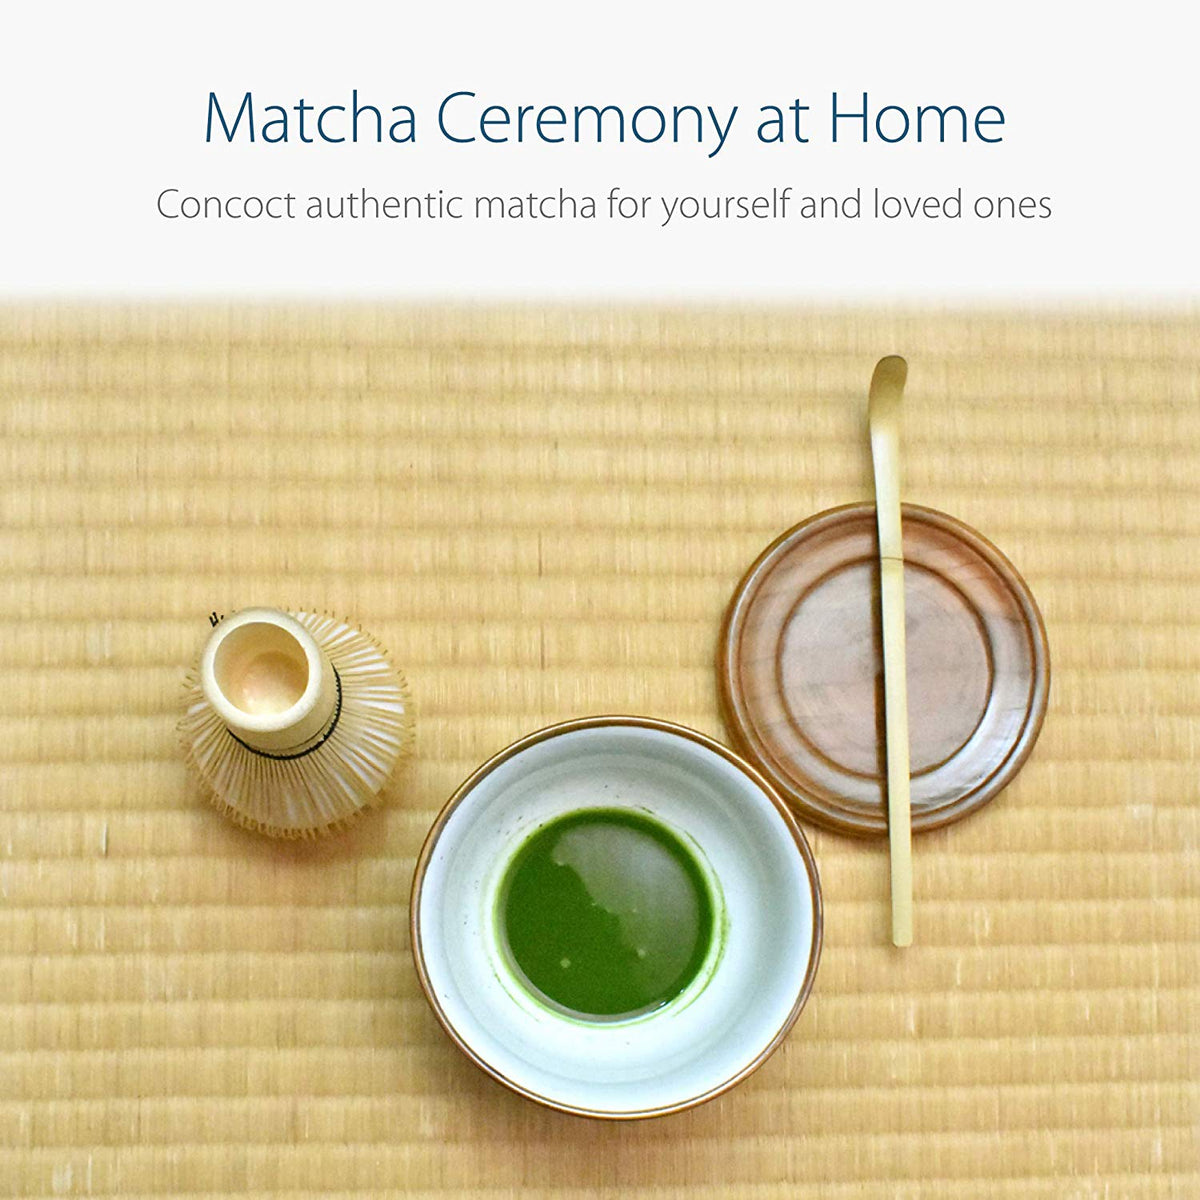 Matcha Tools - Make Matcha Using Our Tea Tool Sets & Accessories Kits